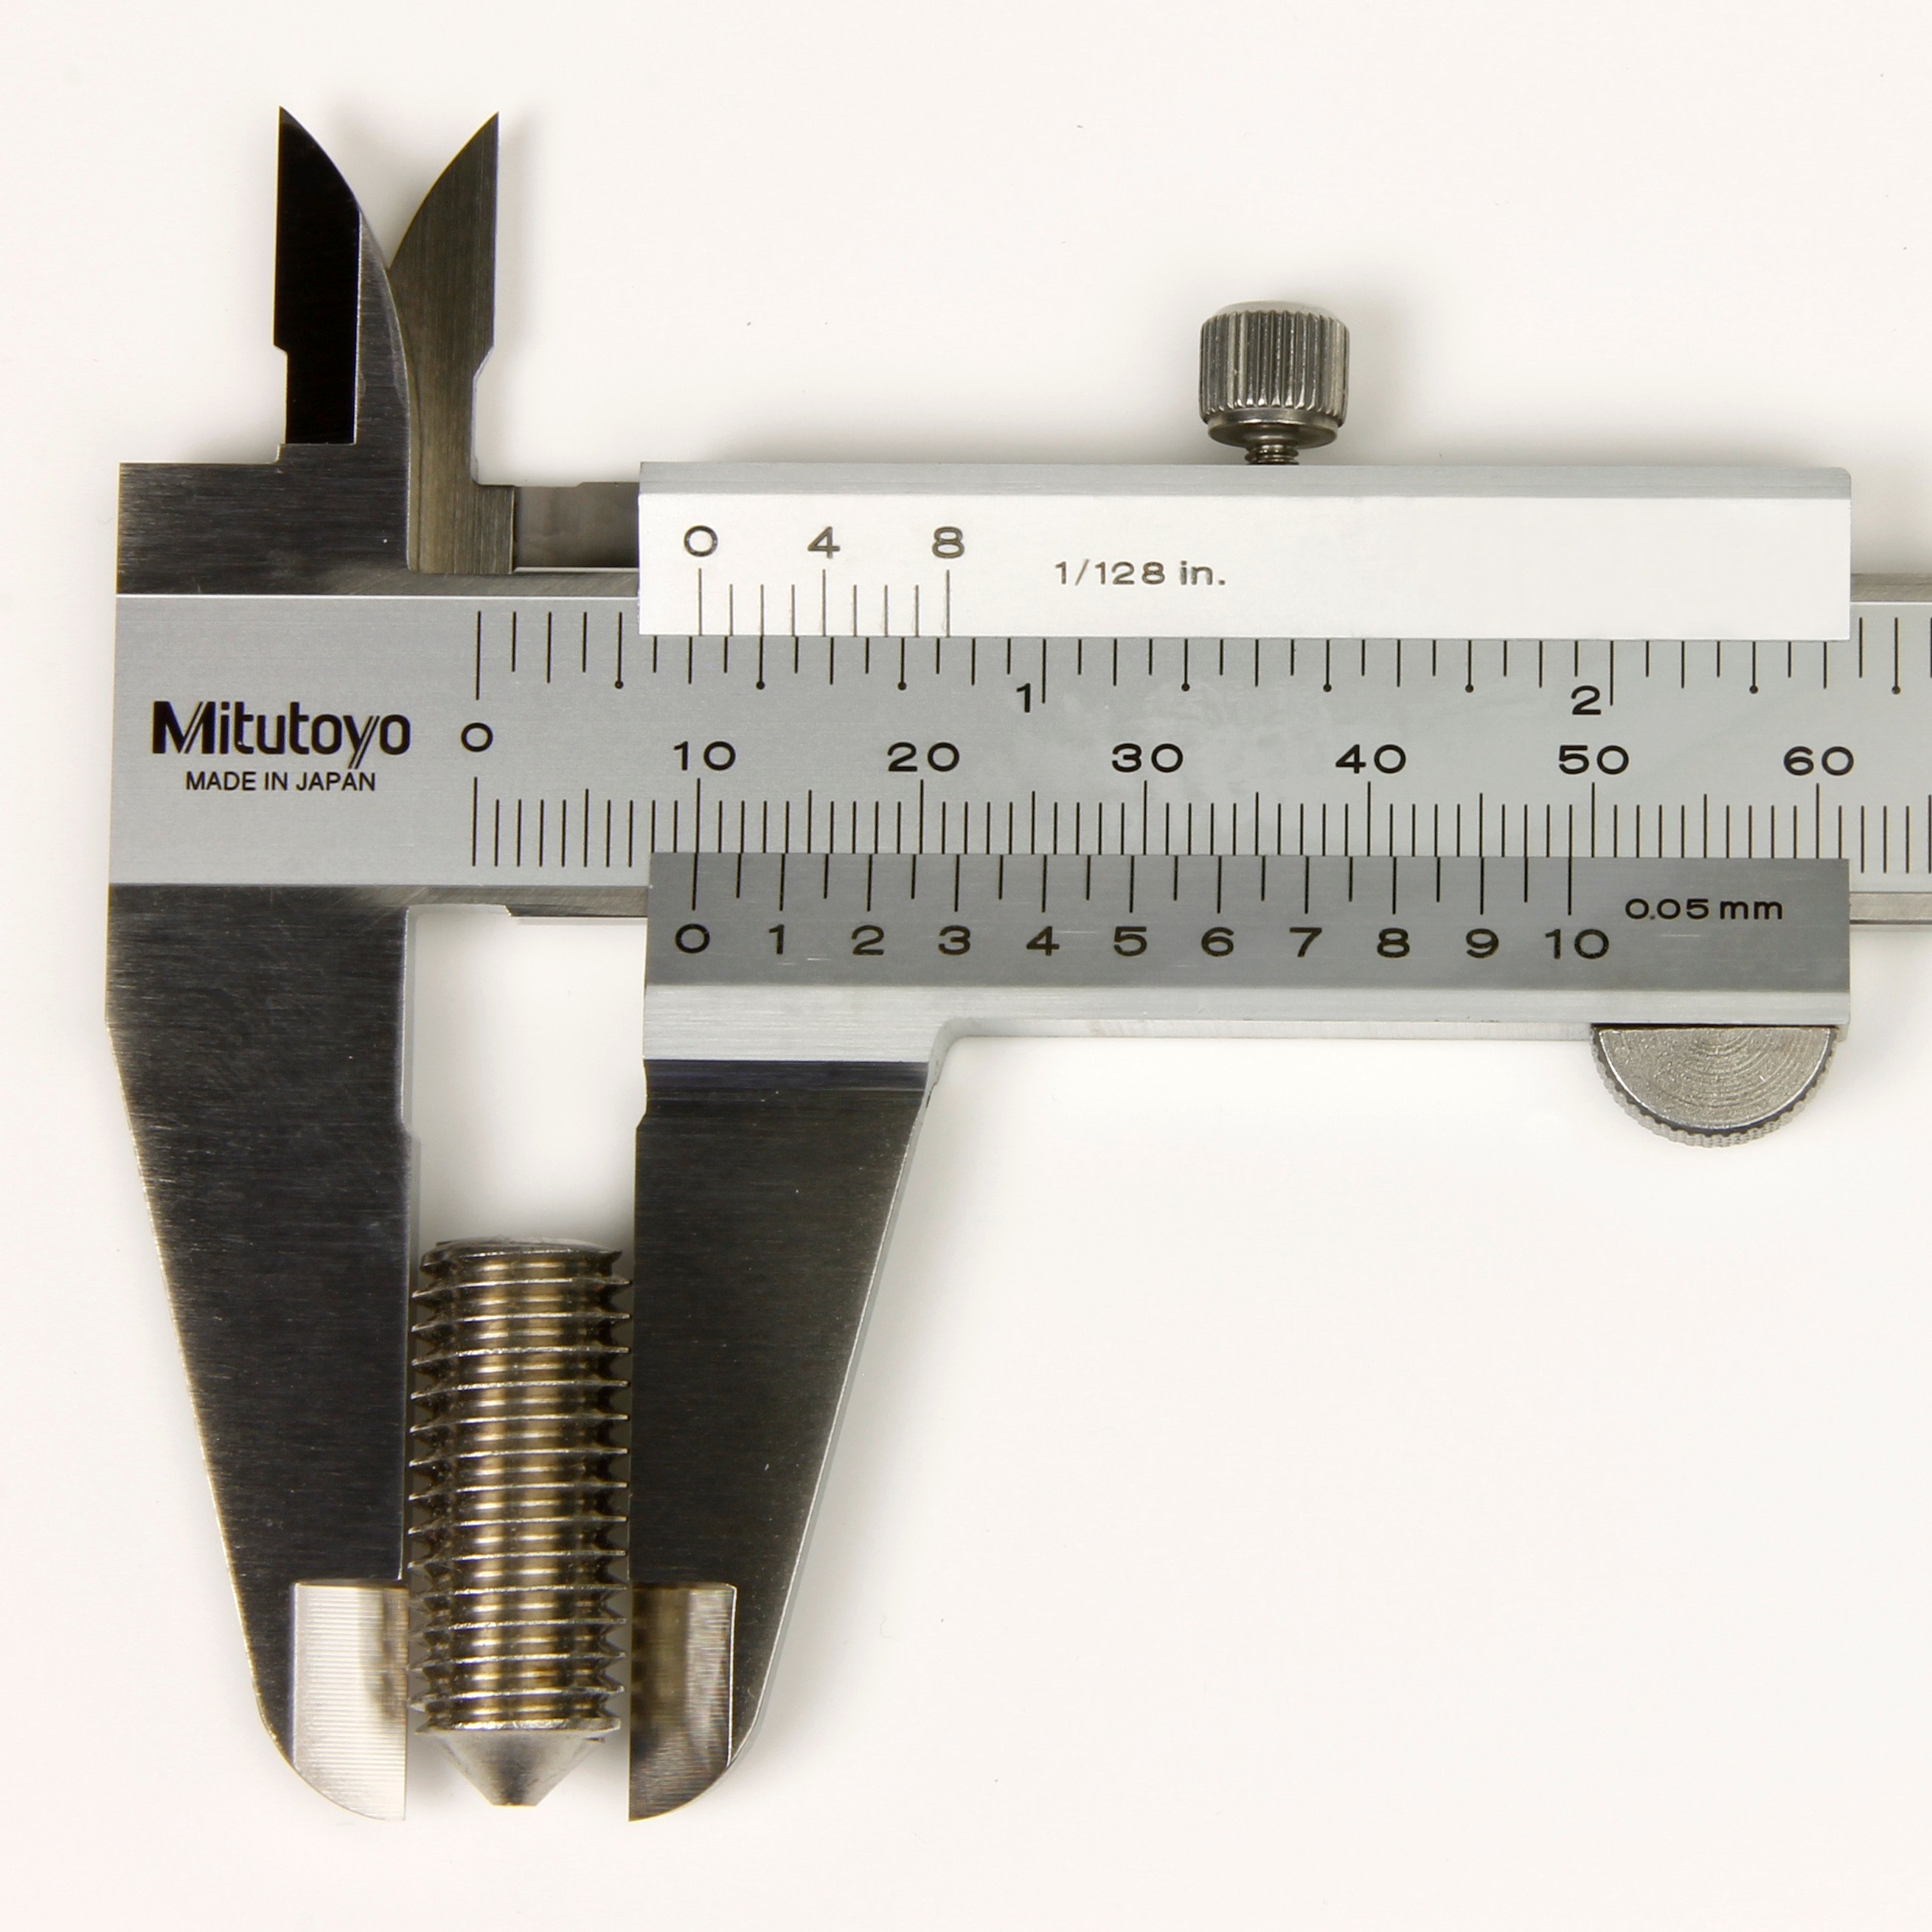 Grub screw diameter measured with vernier calipers